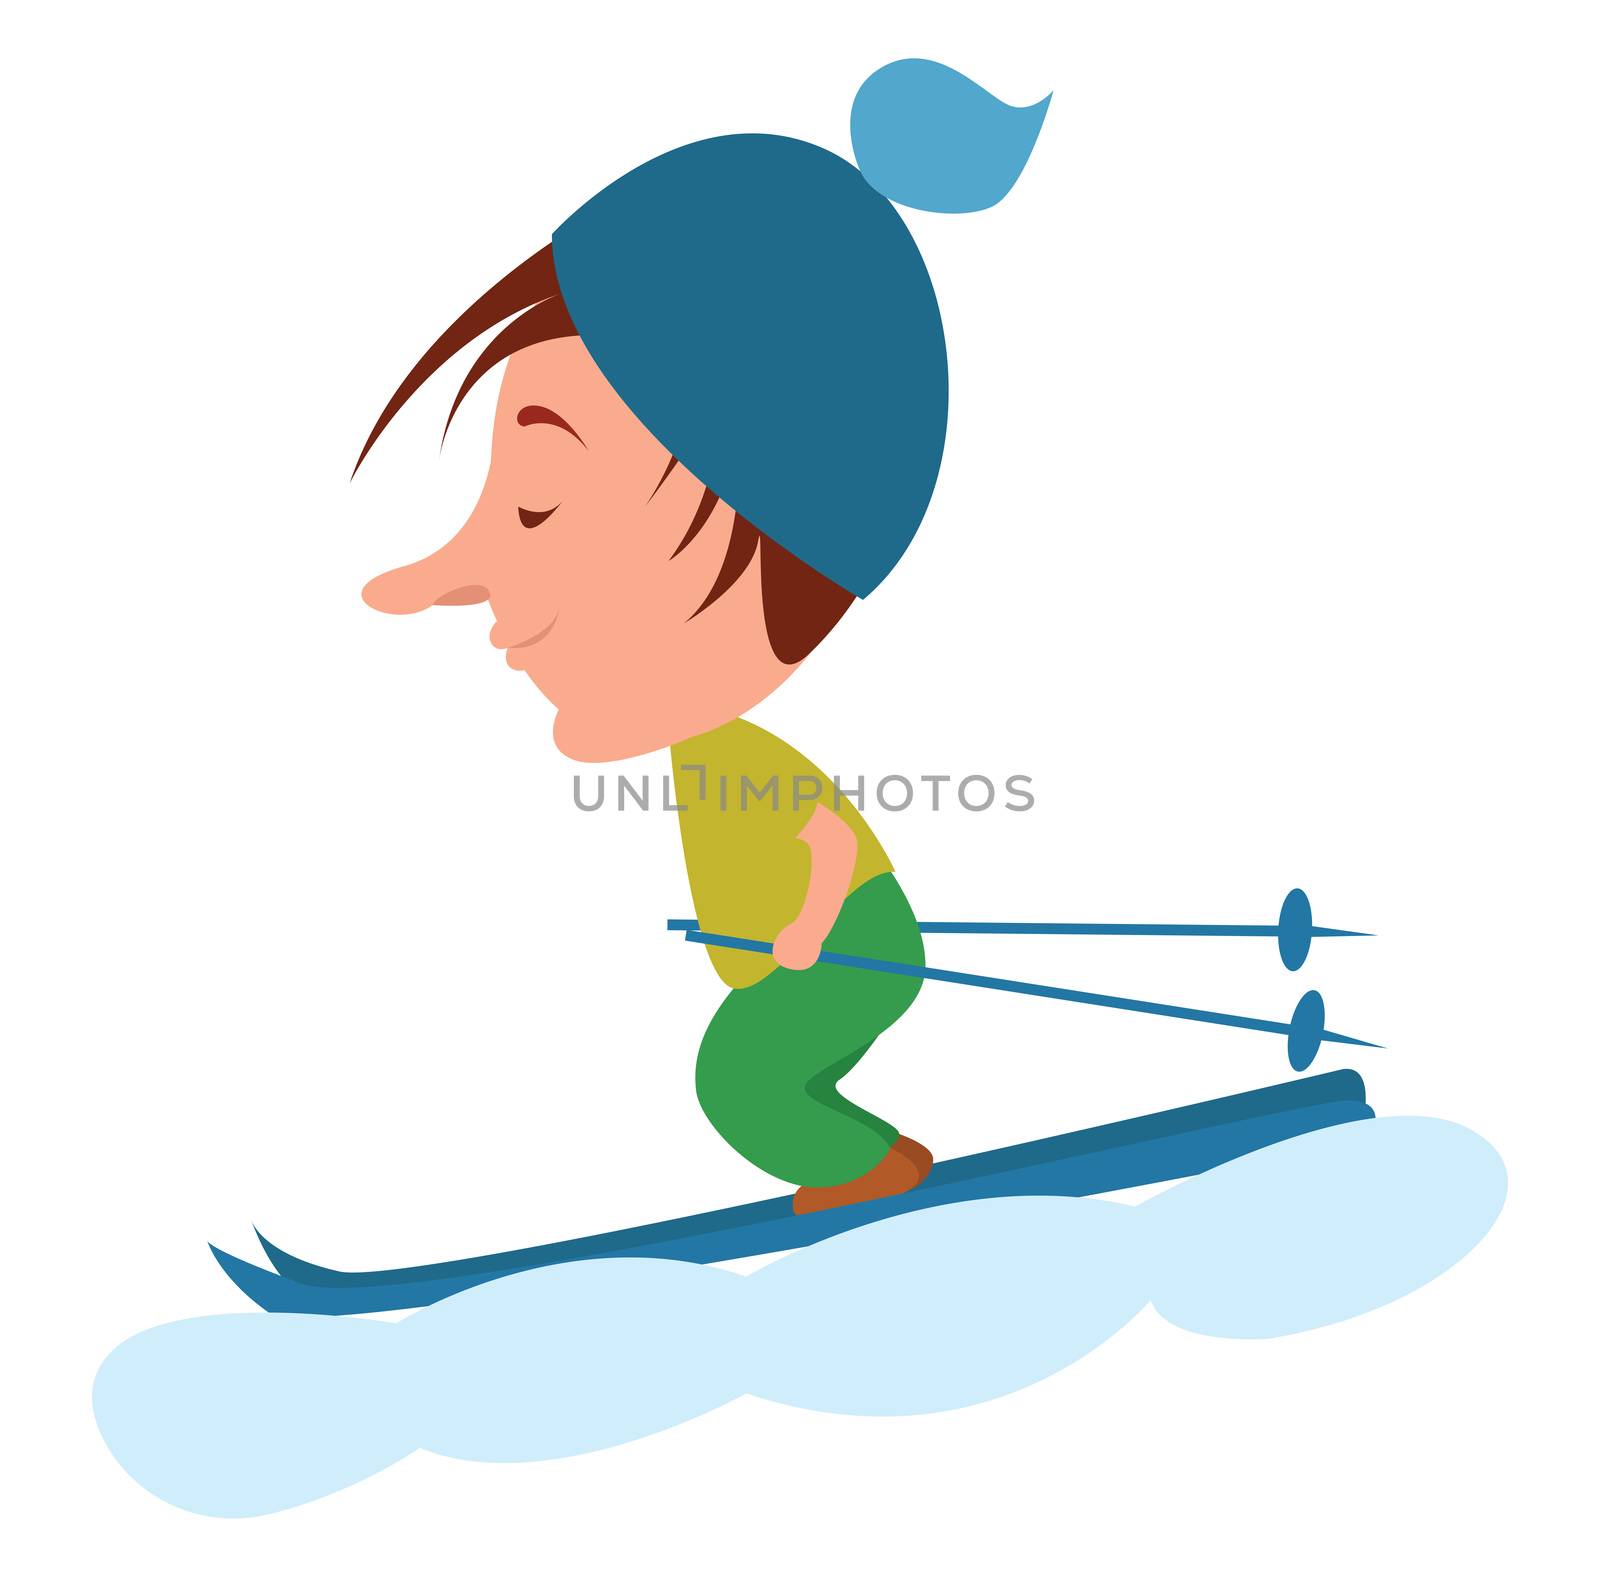 Man skiing on snow , illustration, vector on white background